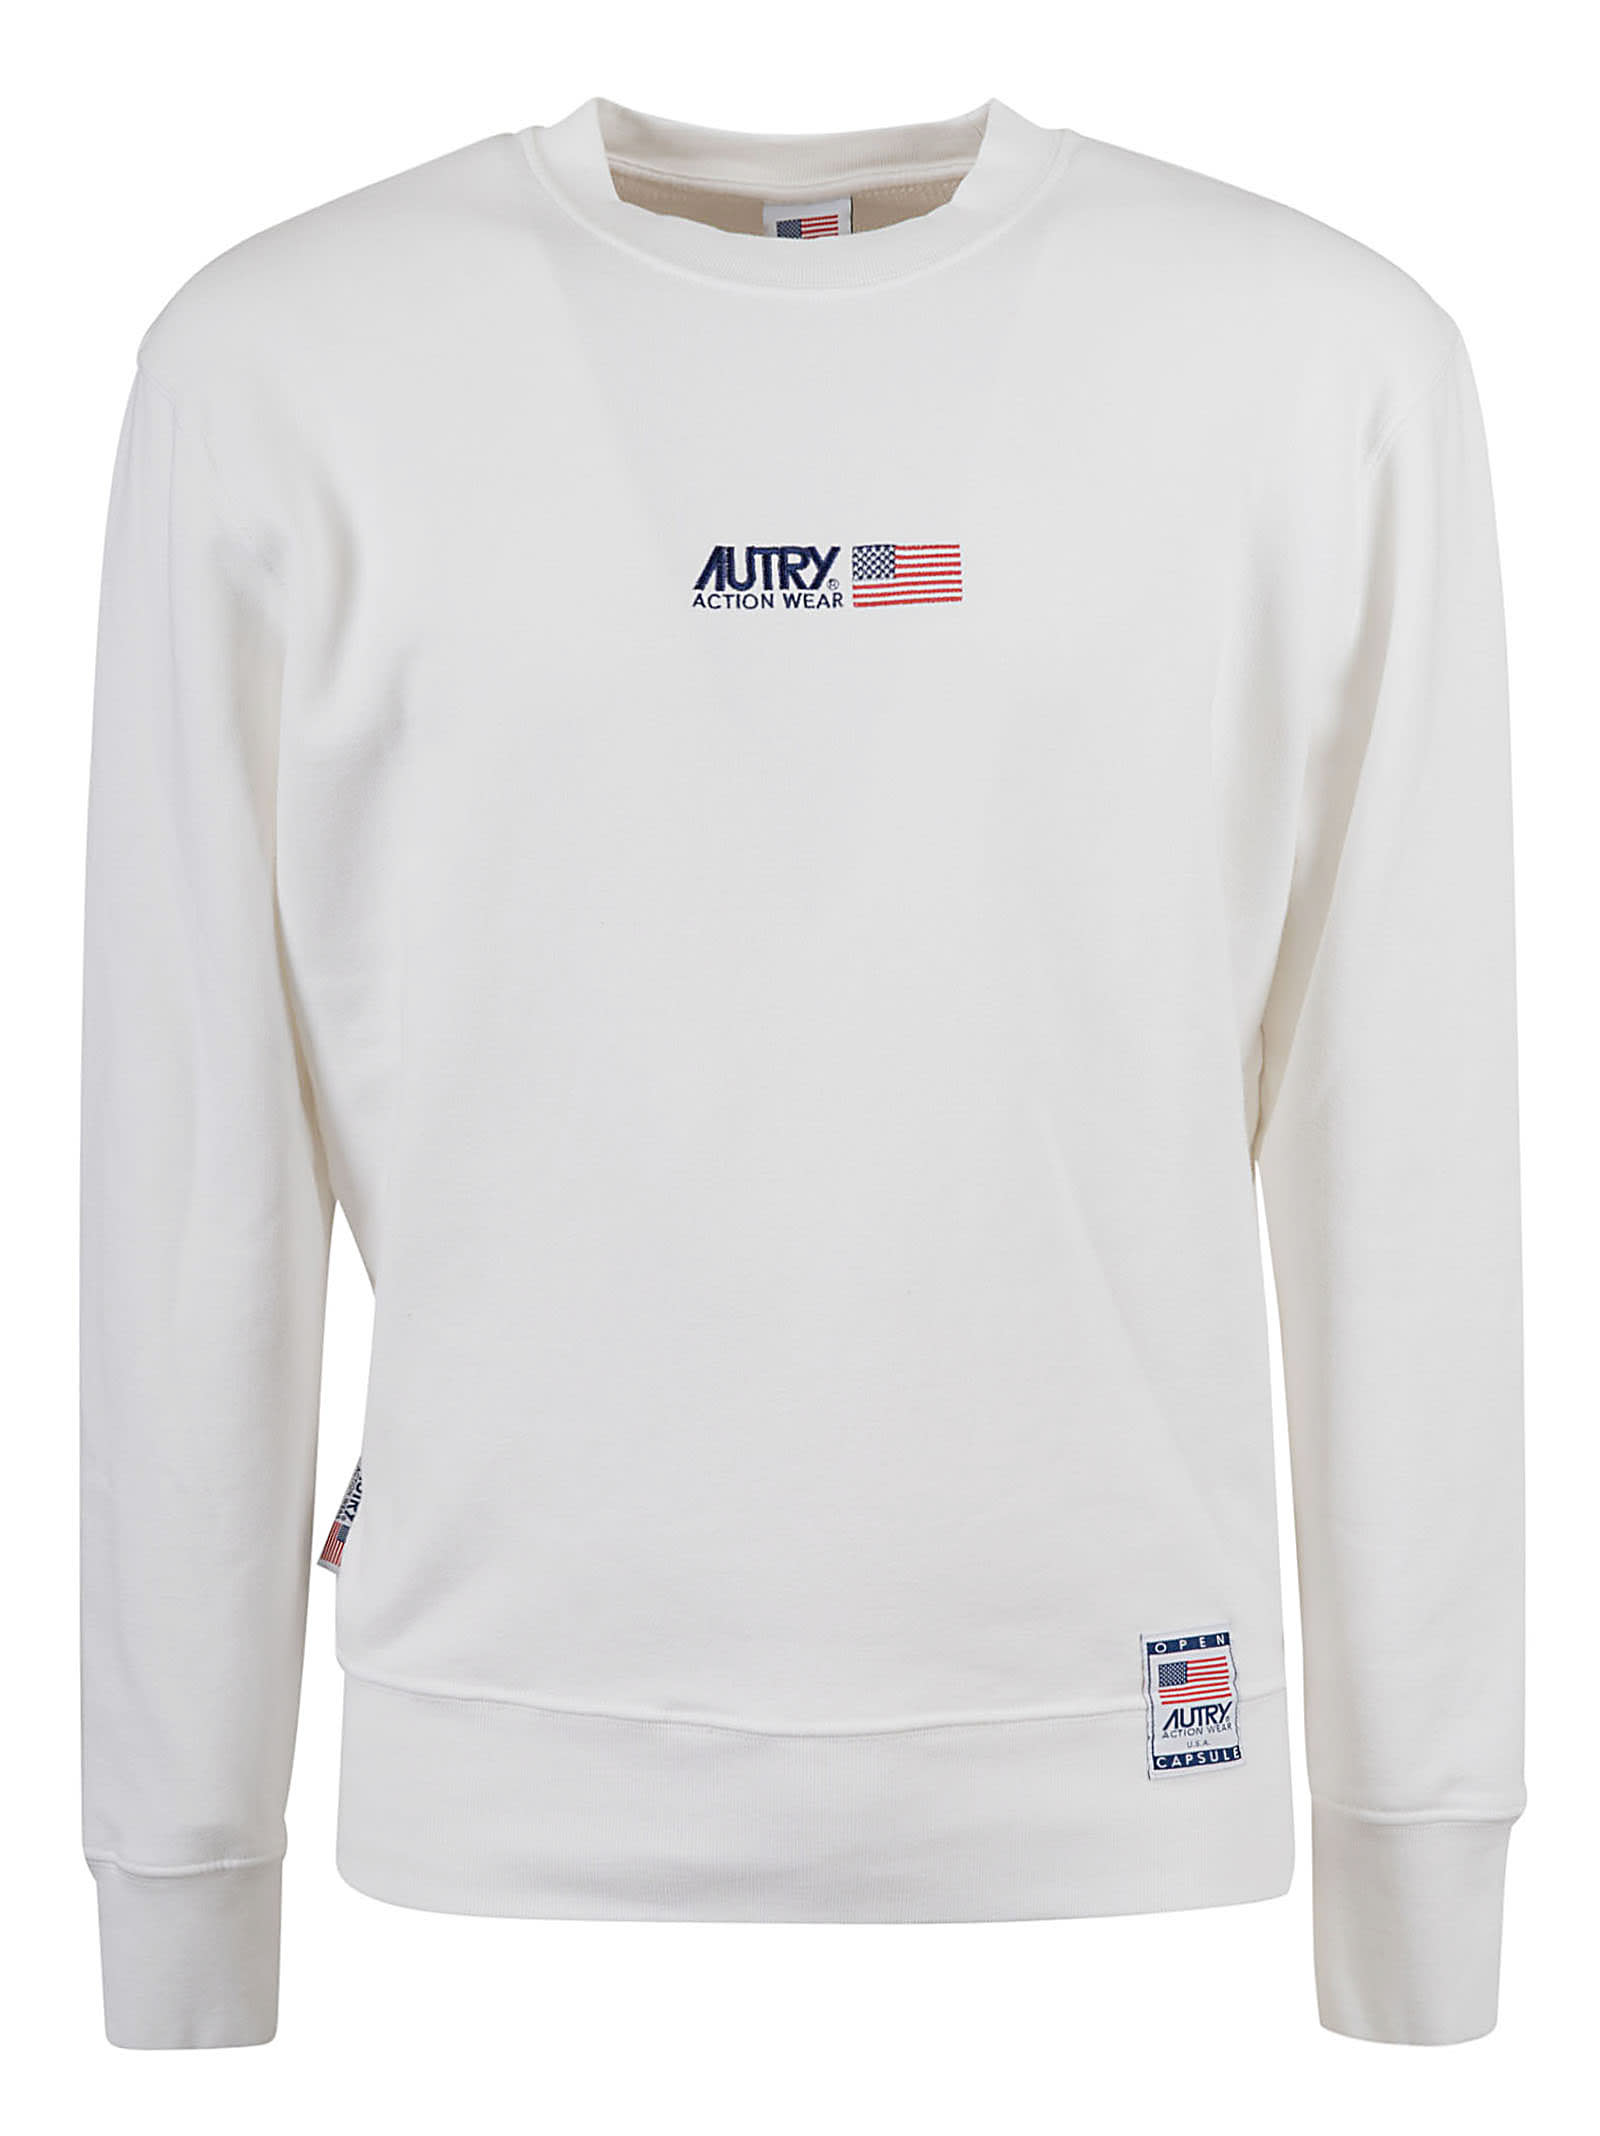 Autry Logo Print Sweatshirt